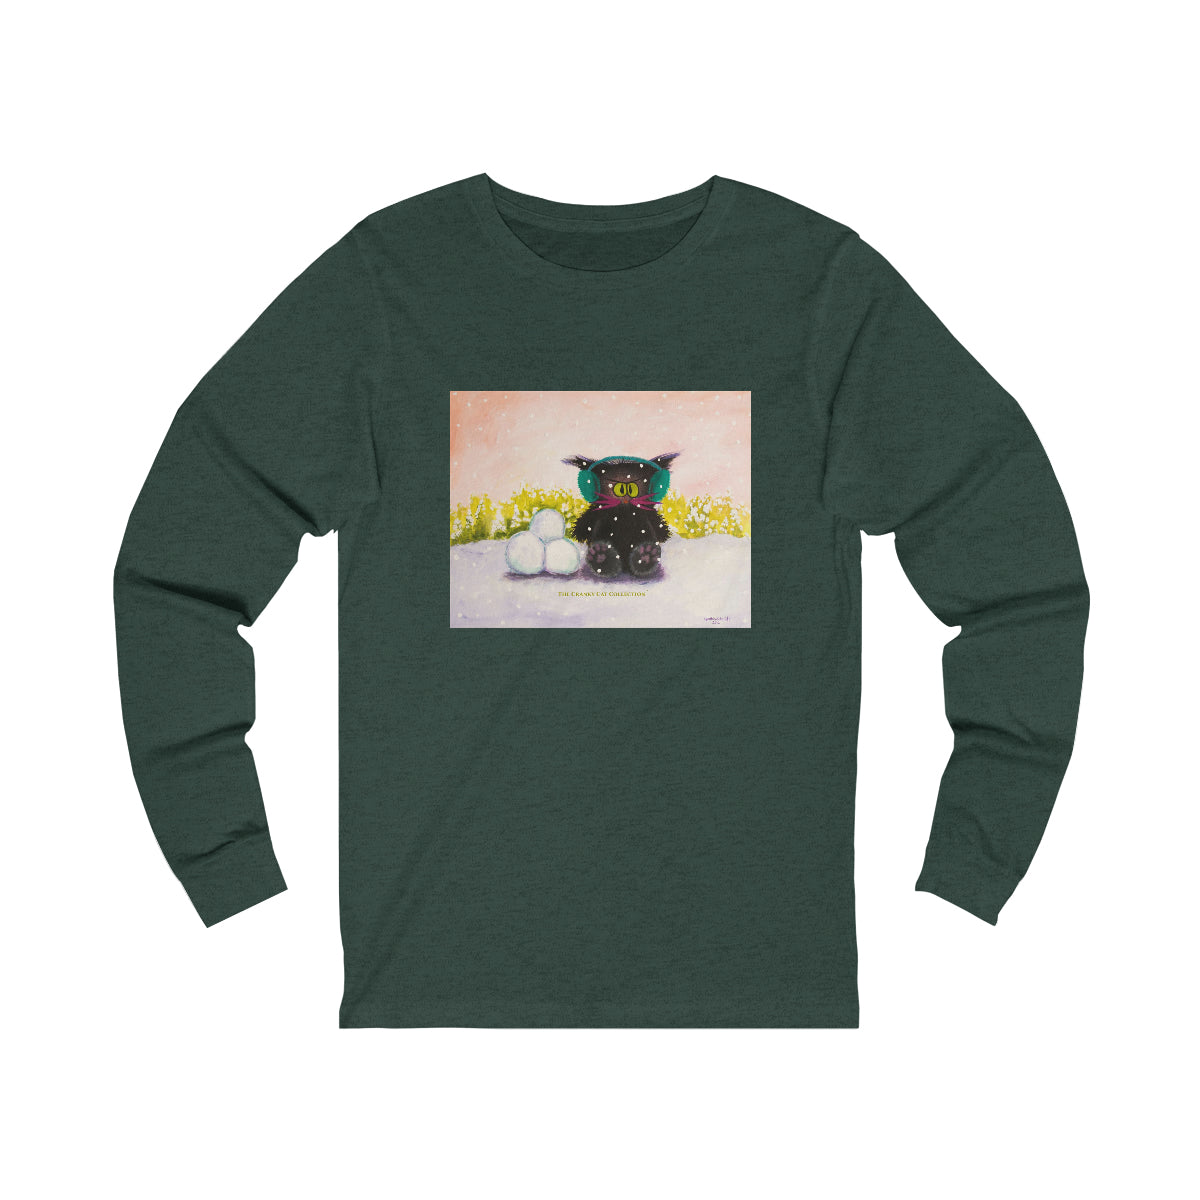 Cranky Cat Winter-Themed Long Sleeve Tee - Free Shipping!